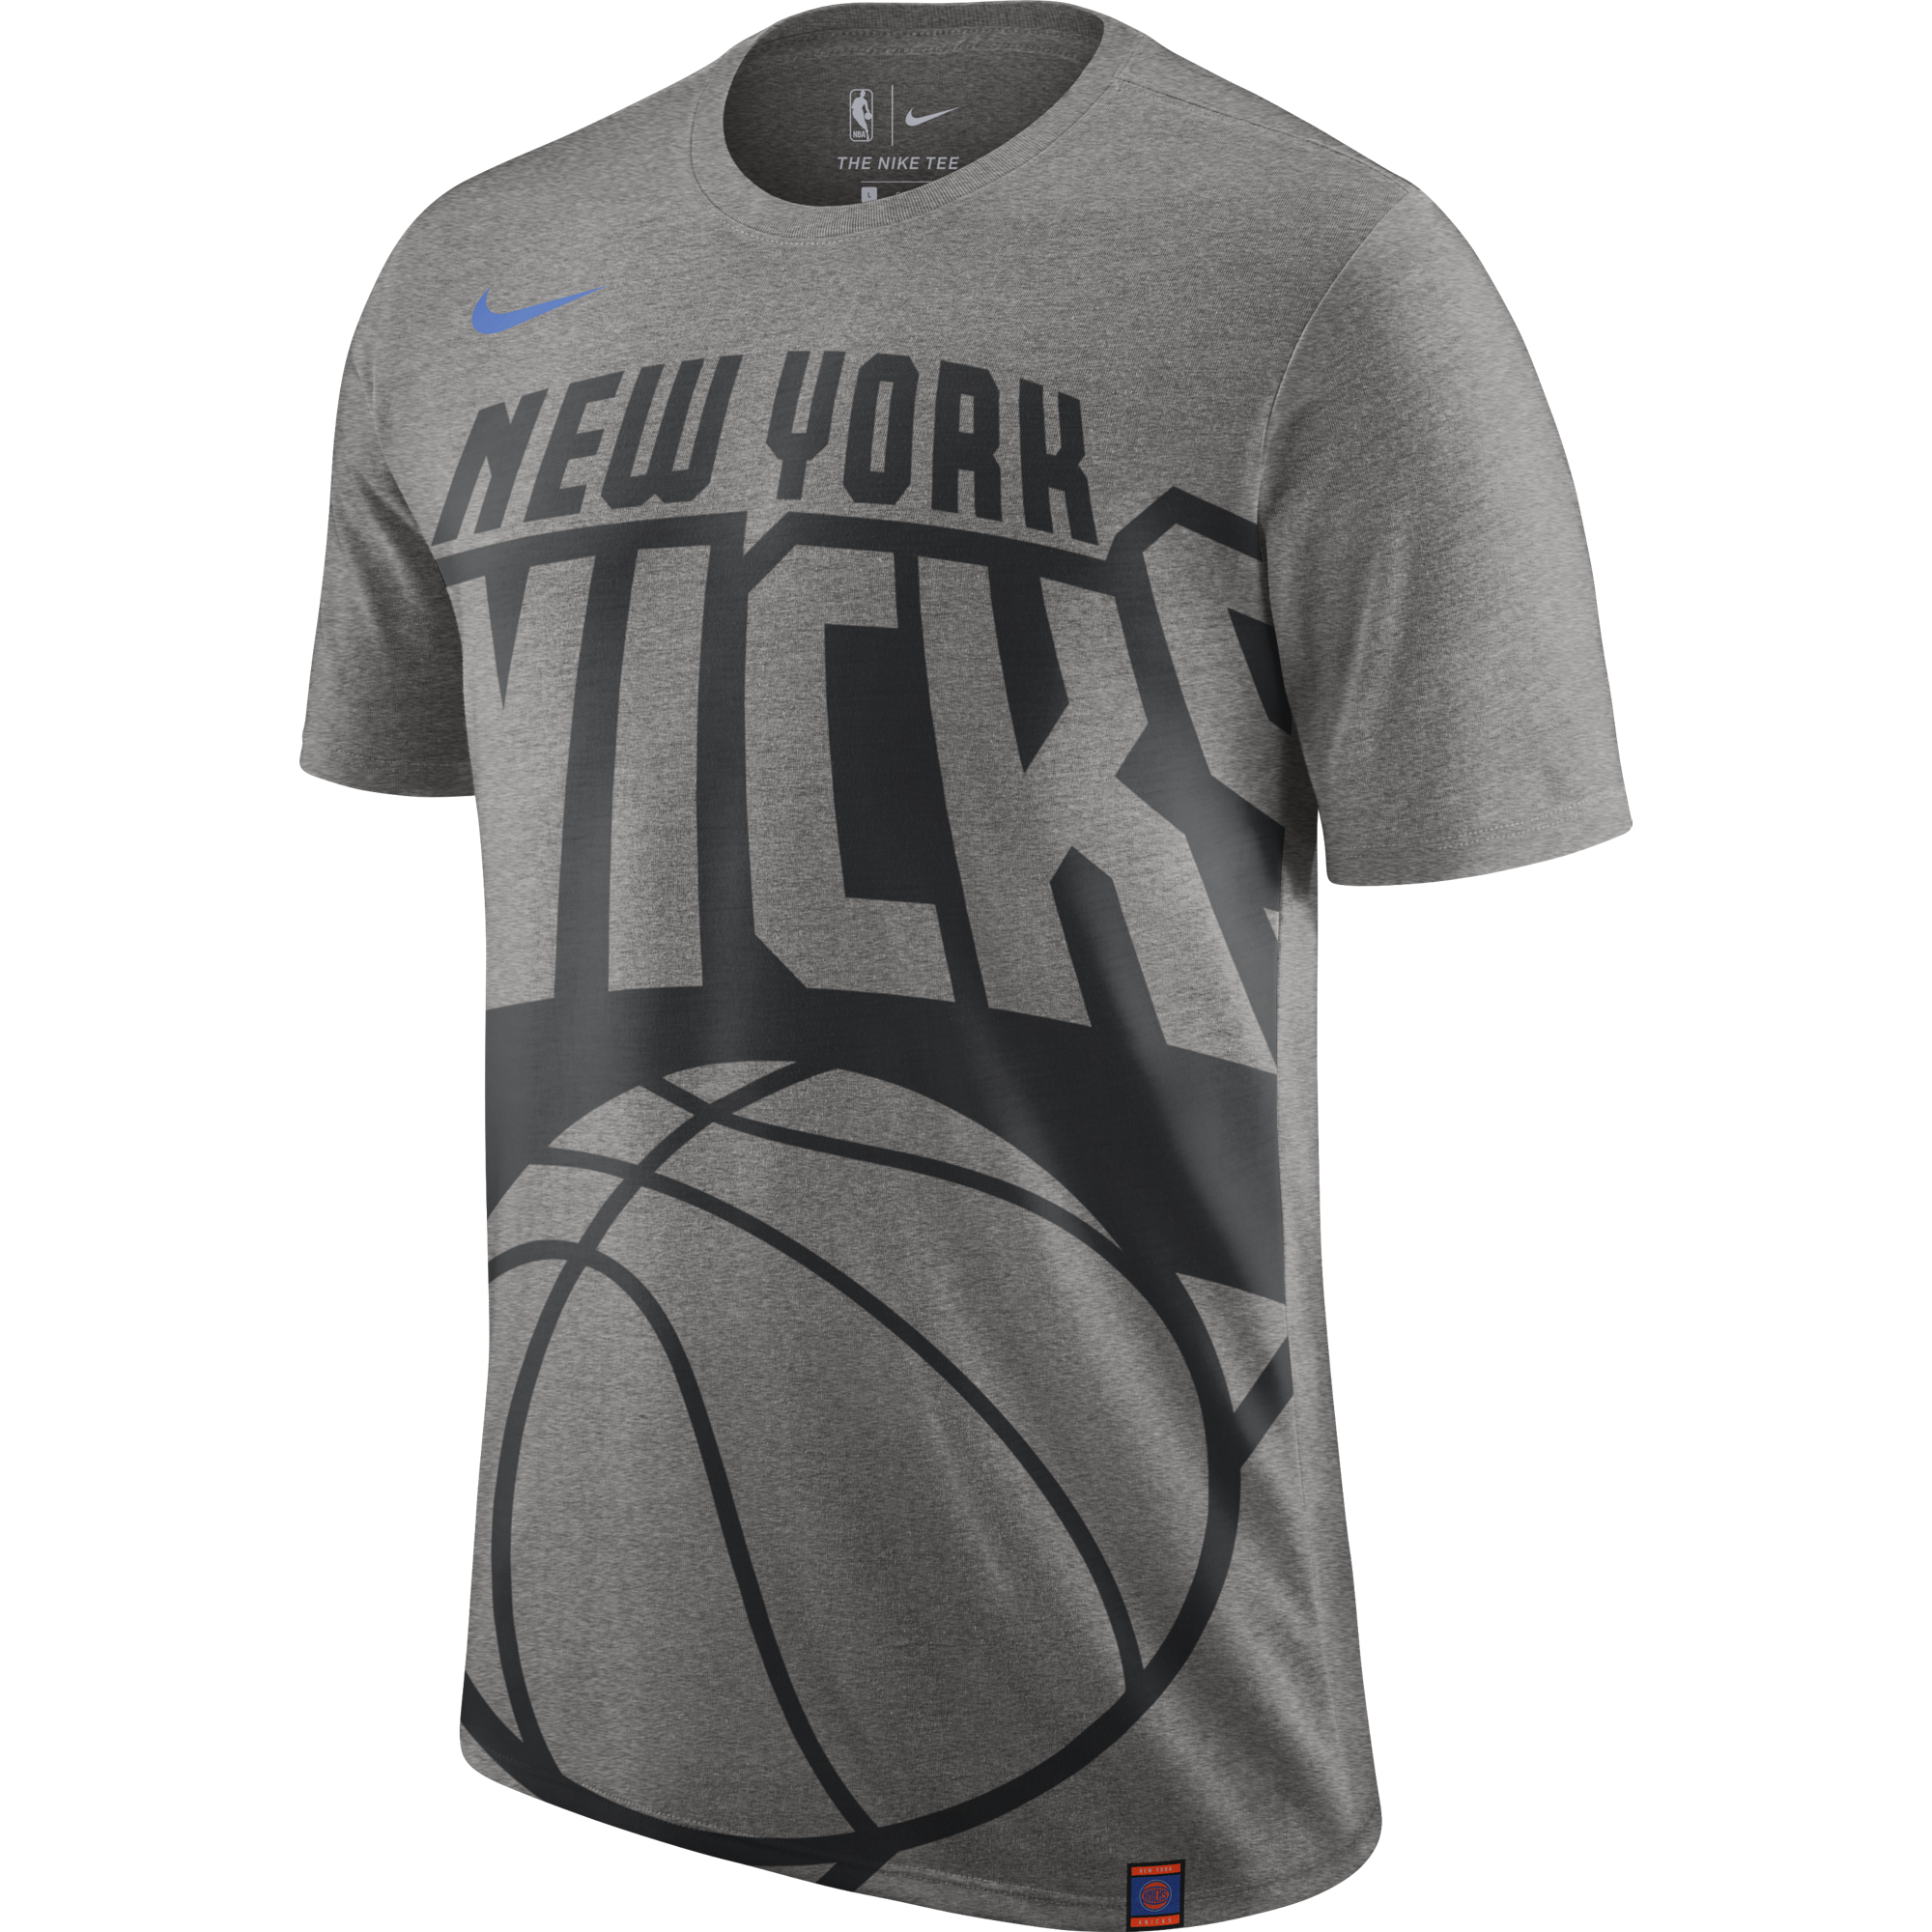 NIKE NBA NEW YORK KNICKS LOGO TEE DARK GREY HEATHER